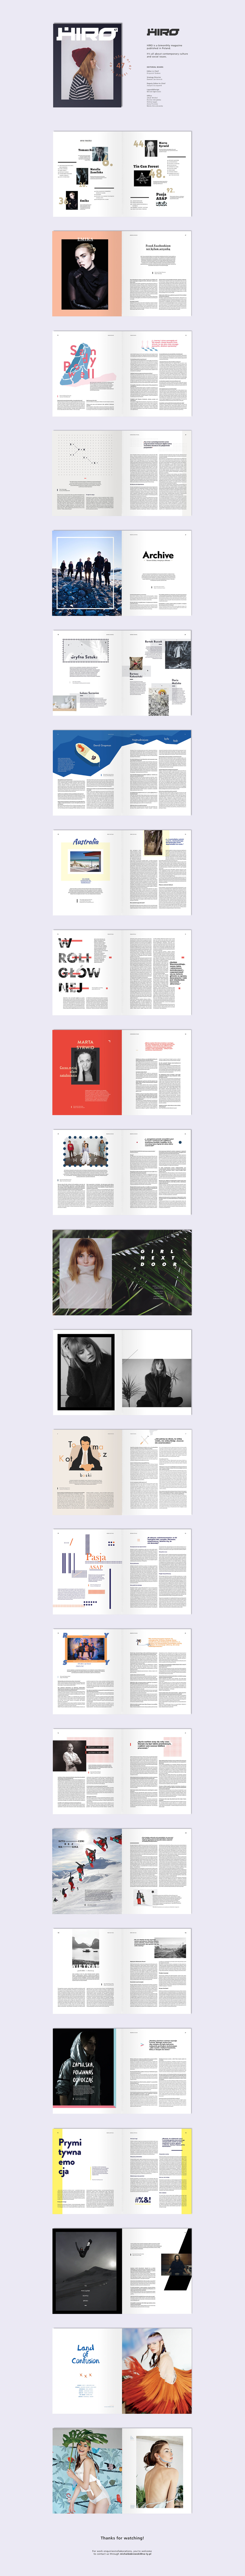 print Layout editorial publication design minimal book magazine type magazines modern